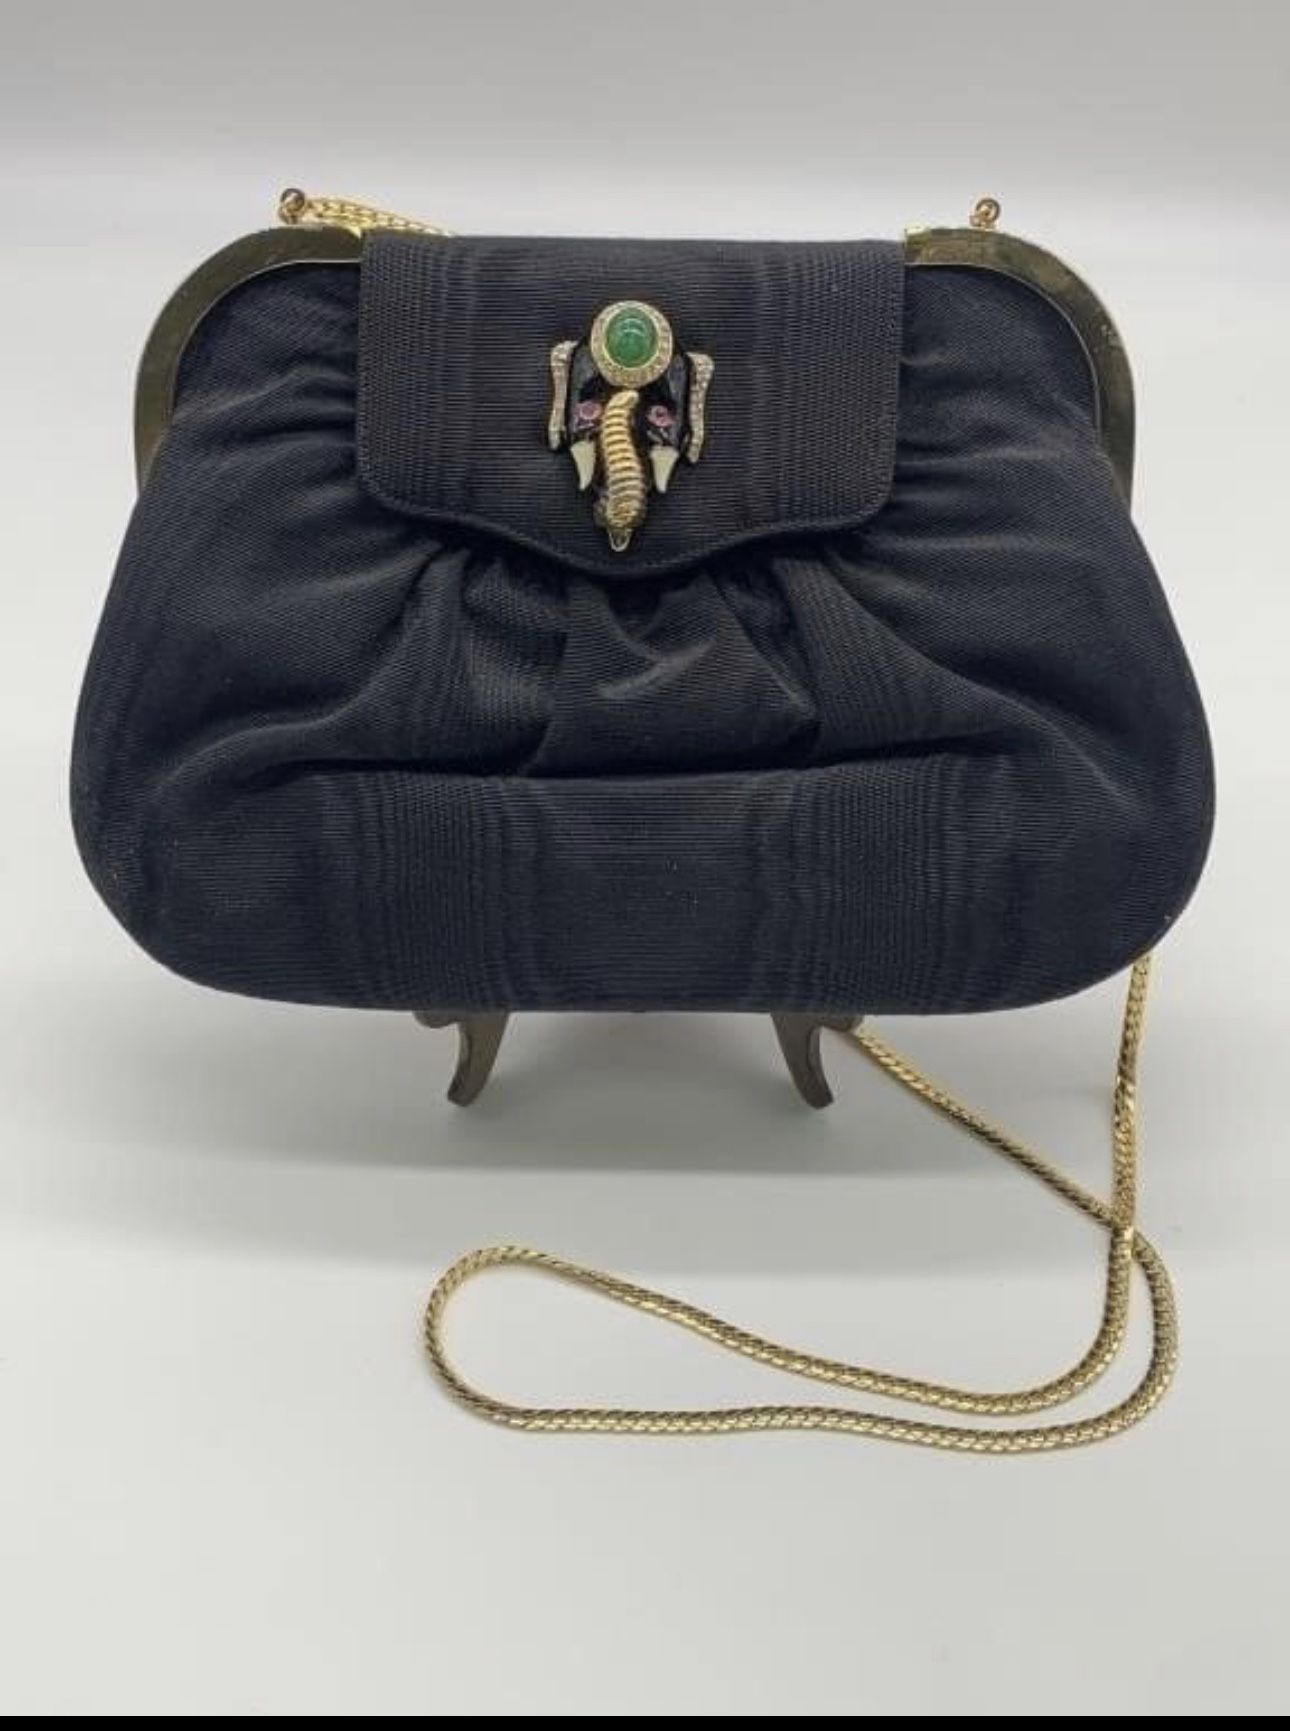 1960's Martin Van Schaak Designer Handbag with Elephant Clasp. Extremely Rare.